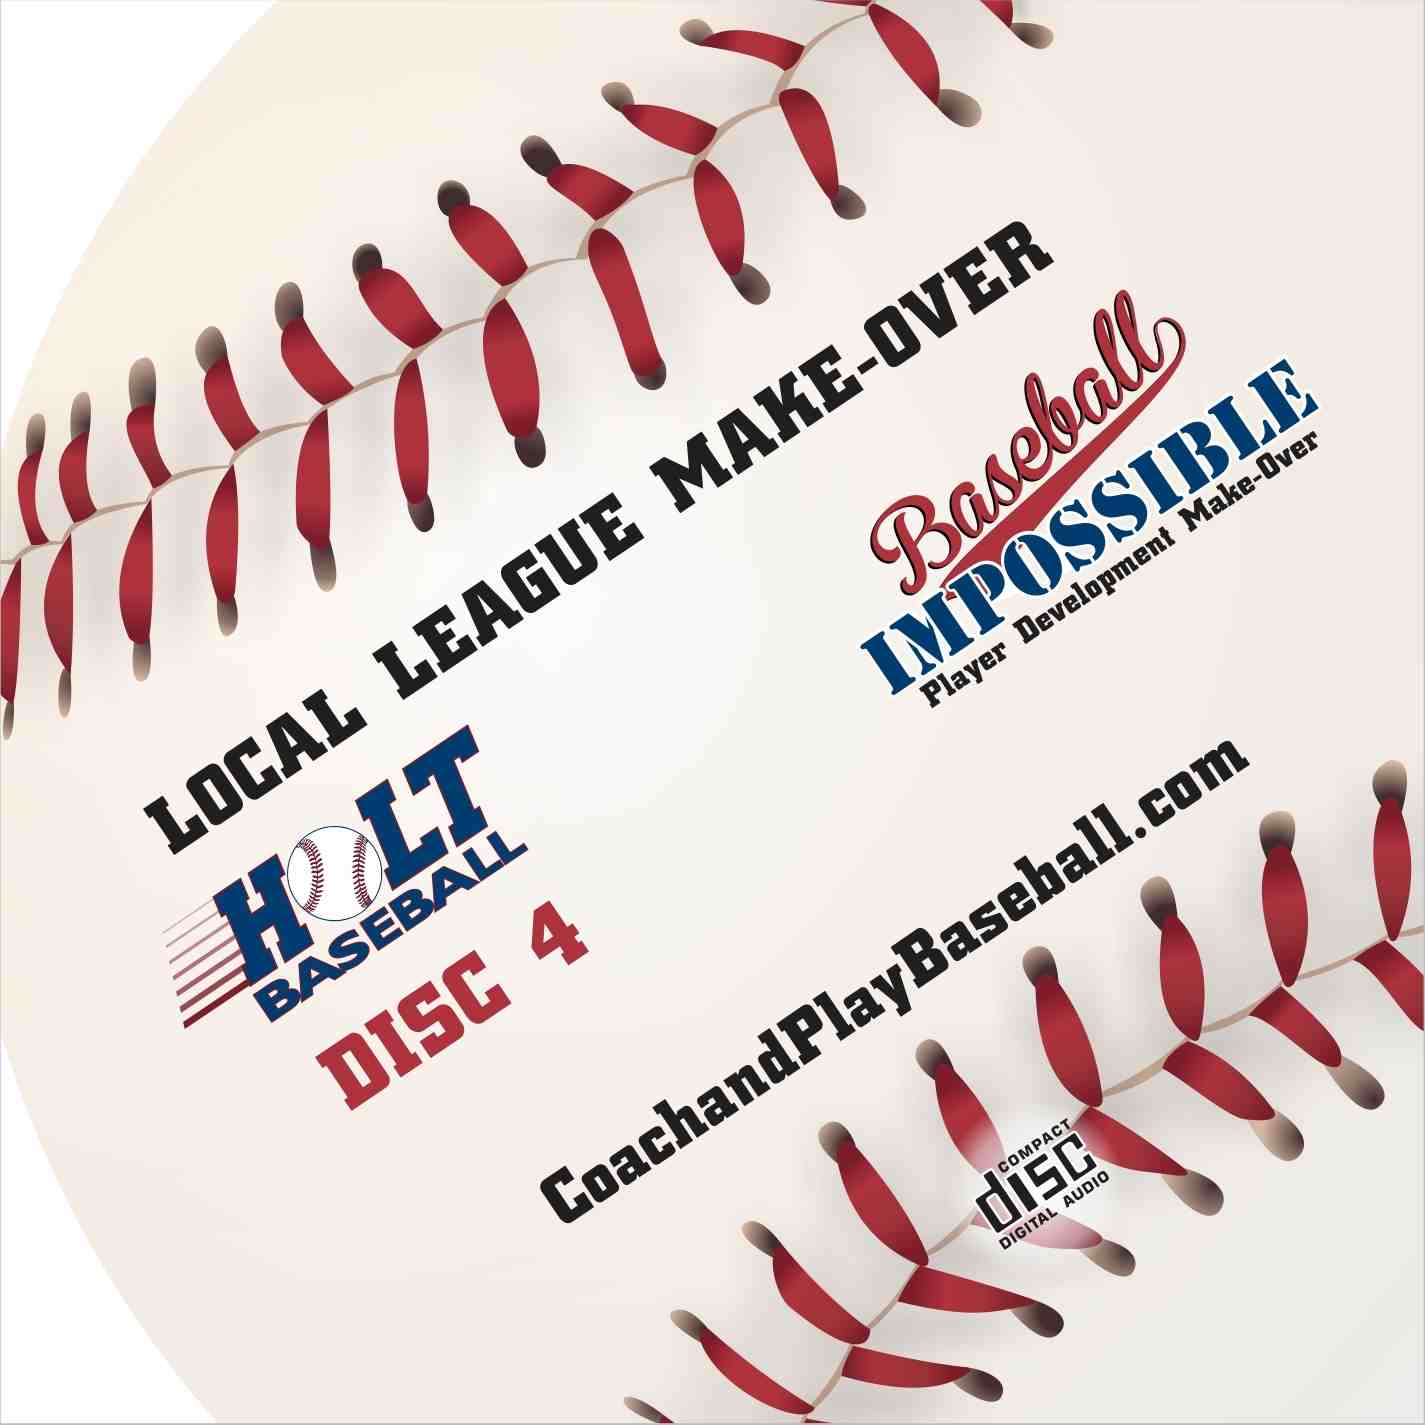 local Minor League Make-Over Youth Baseball